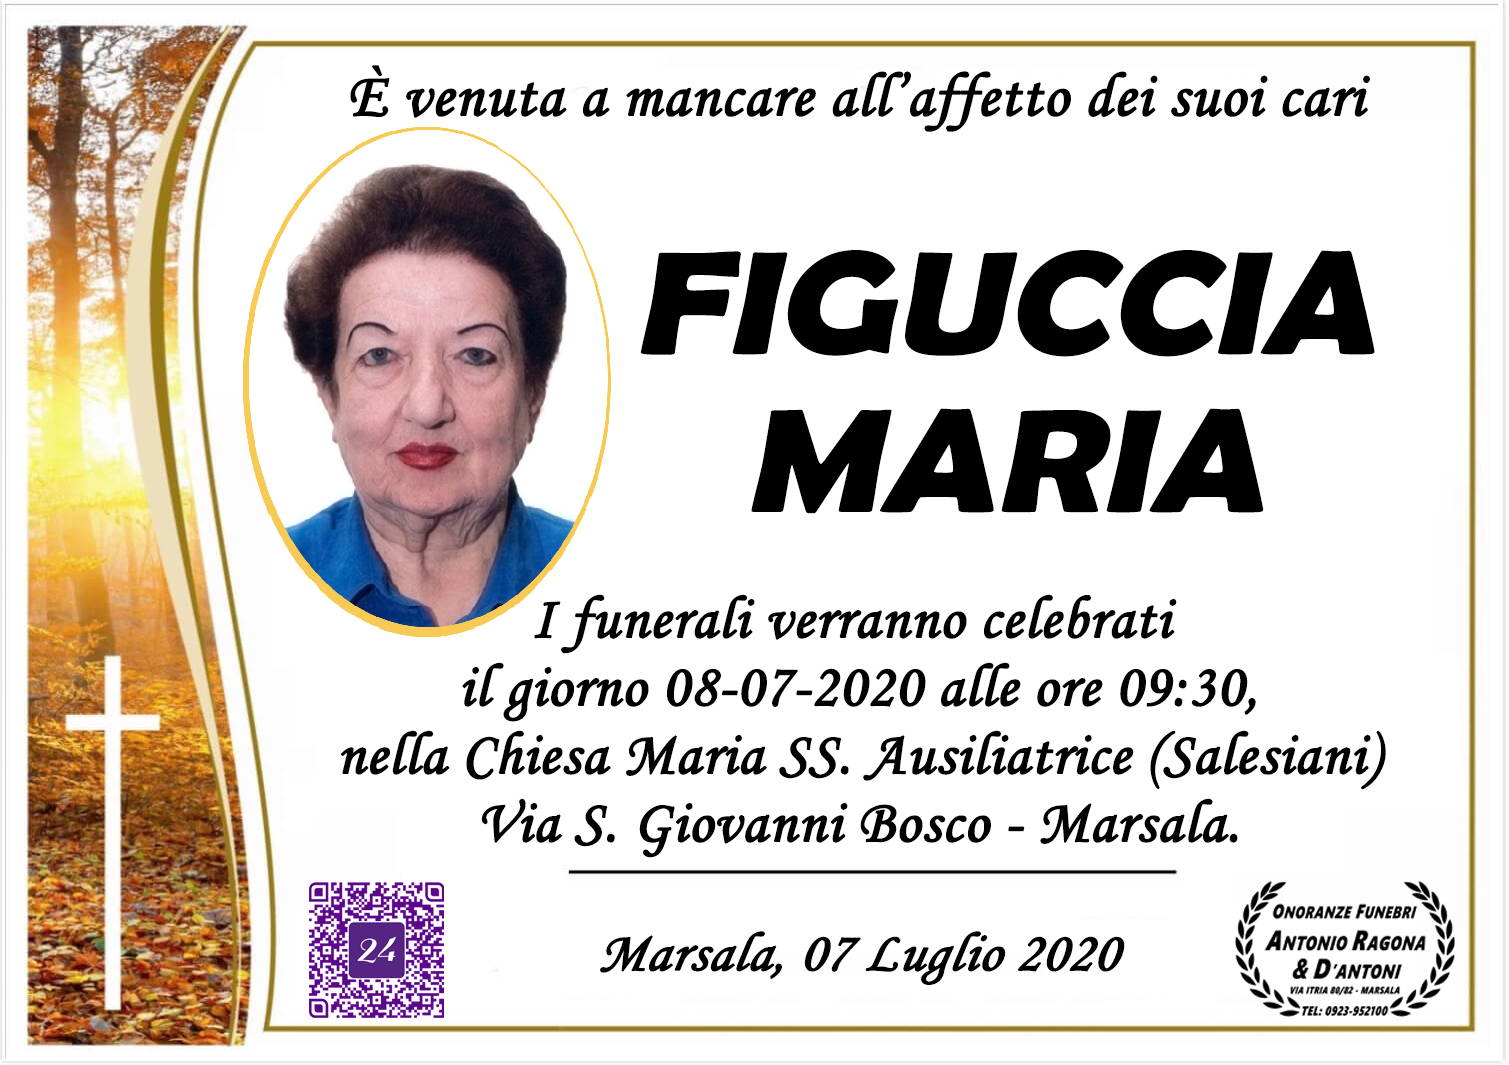 Maria Figuccia